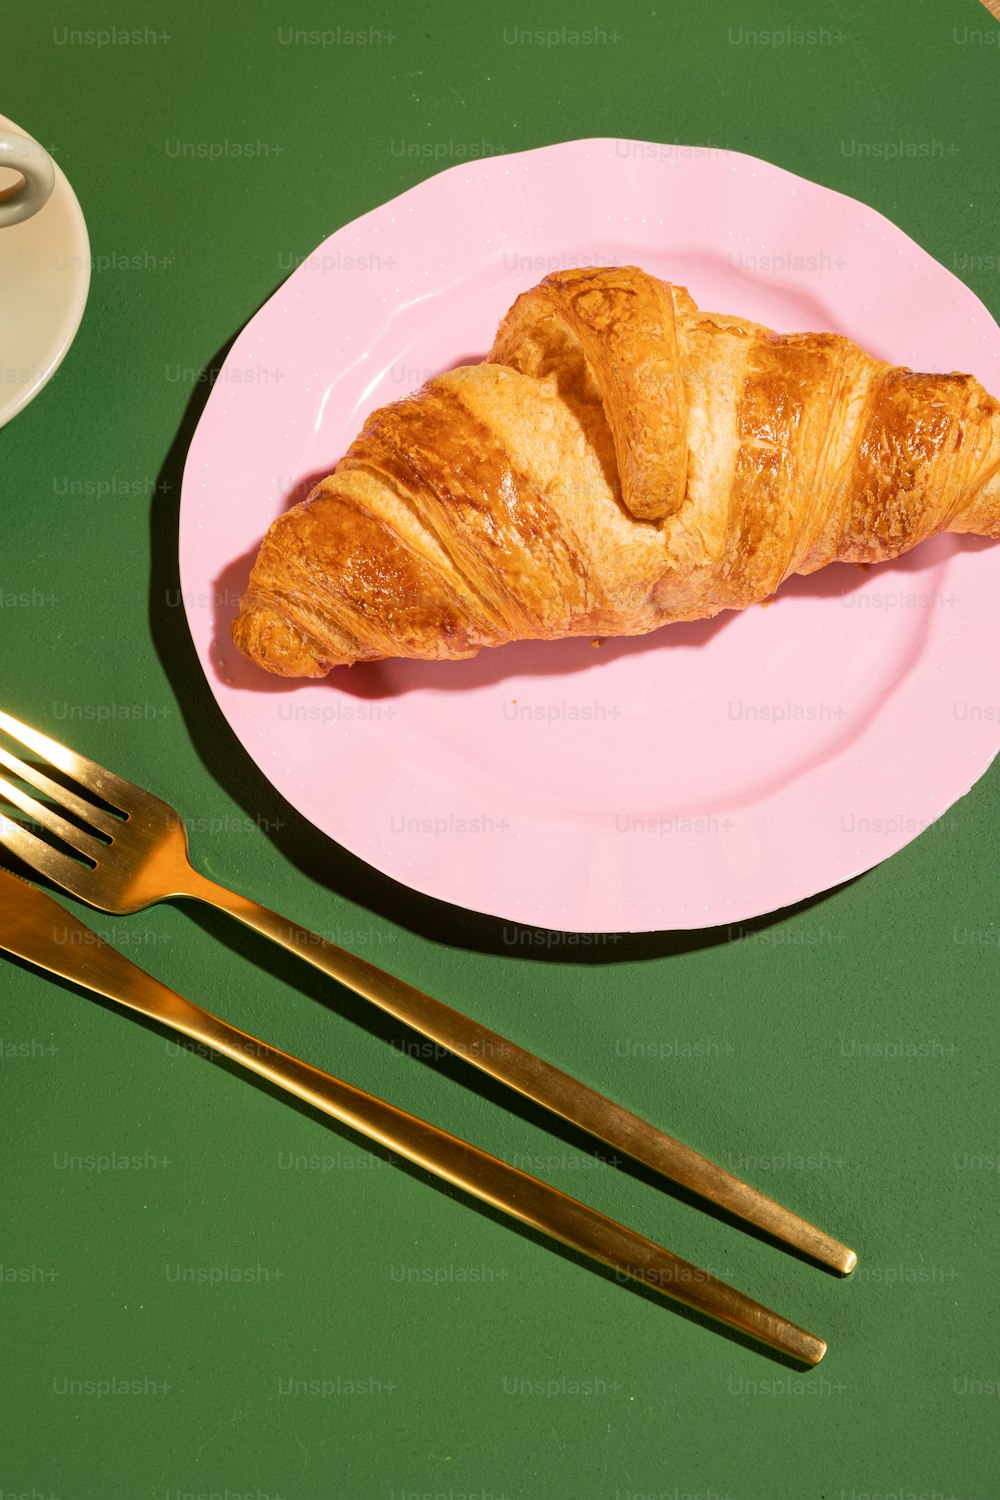 un croissant en un plato rosa junto a un tenedor